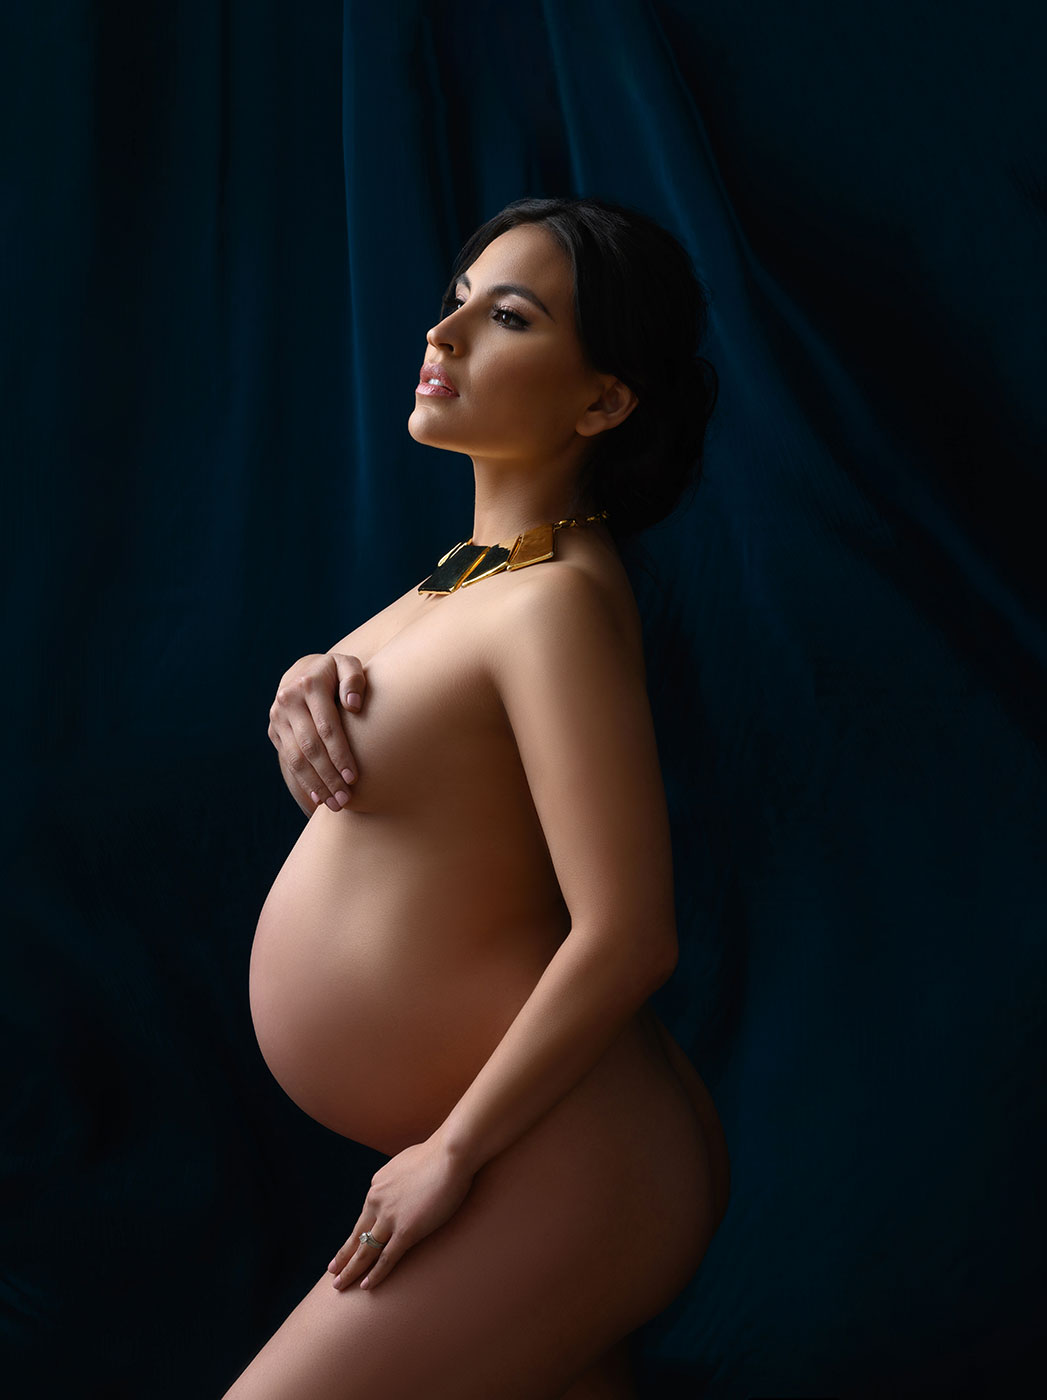 blue velvet backdrop for nude pregnancy portrait with gpld statement necklace